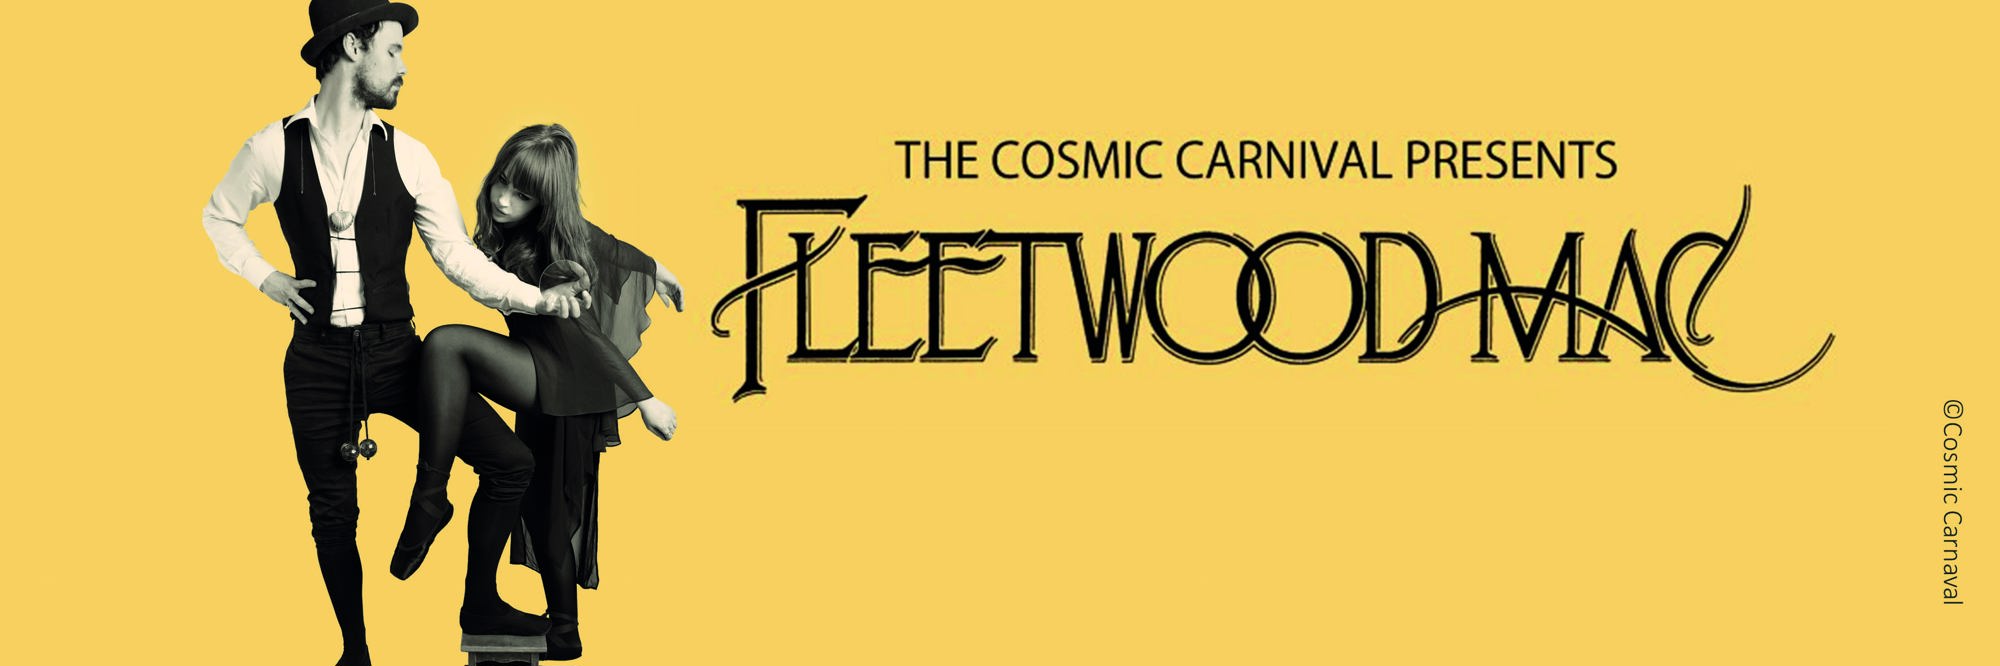 The Cosmic Carnival Fleetwood Mac, The Incredible Story (Rechtenvrij) 5